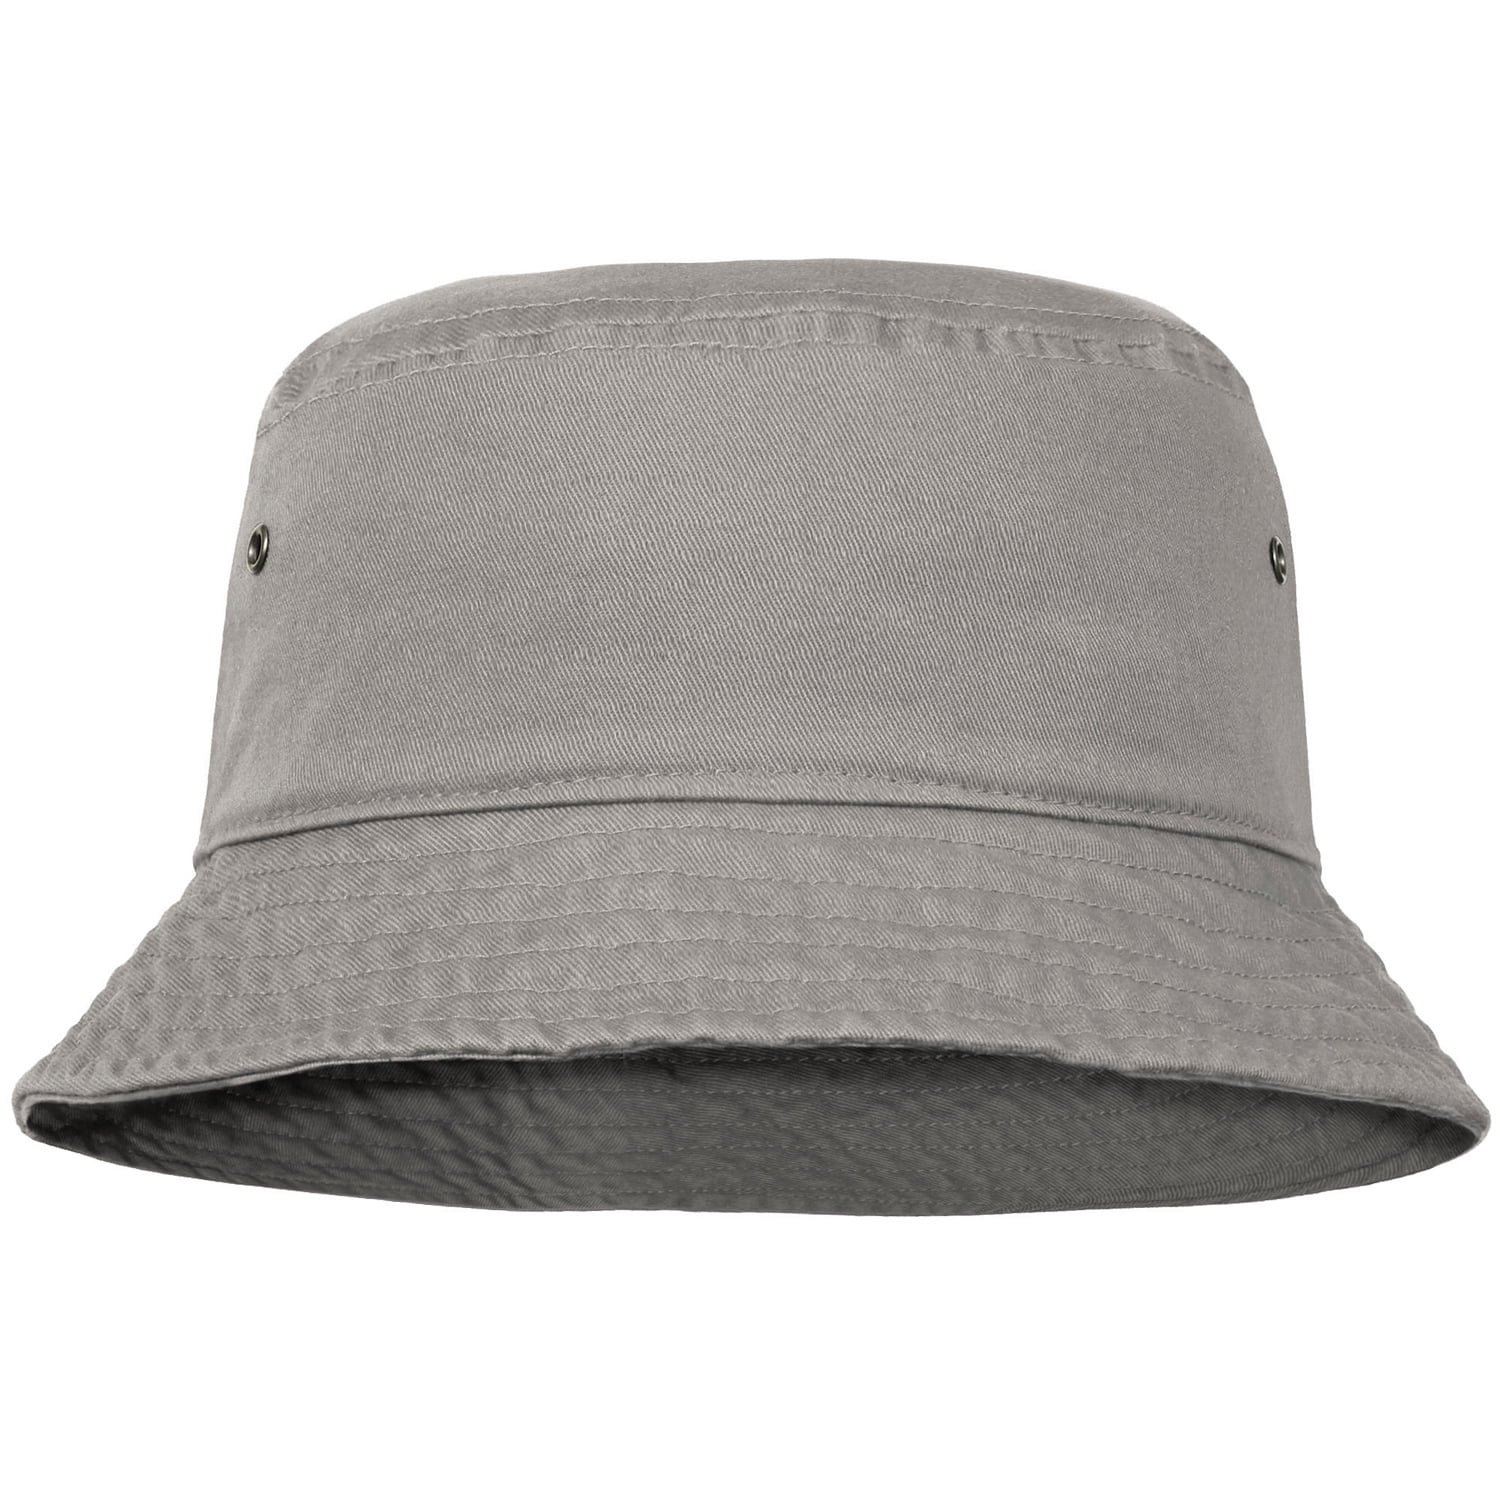 Bucket Hat for Men Women Unisex 100% Cotton Packable Foldable Summer Travel  Beach Outdoor Fishing Hat - SM Grey